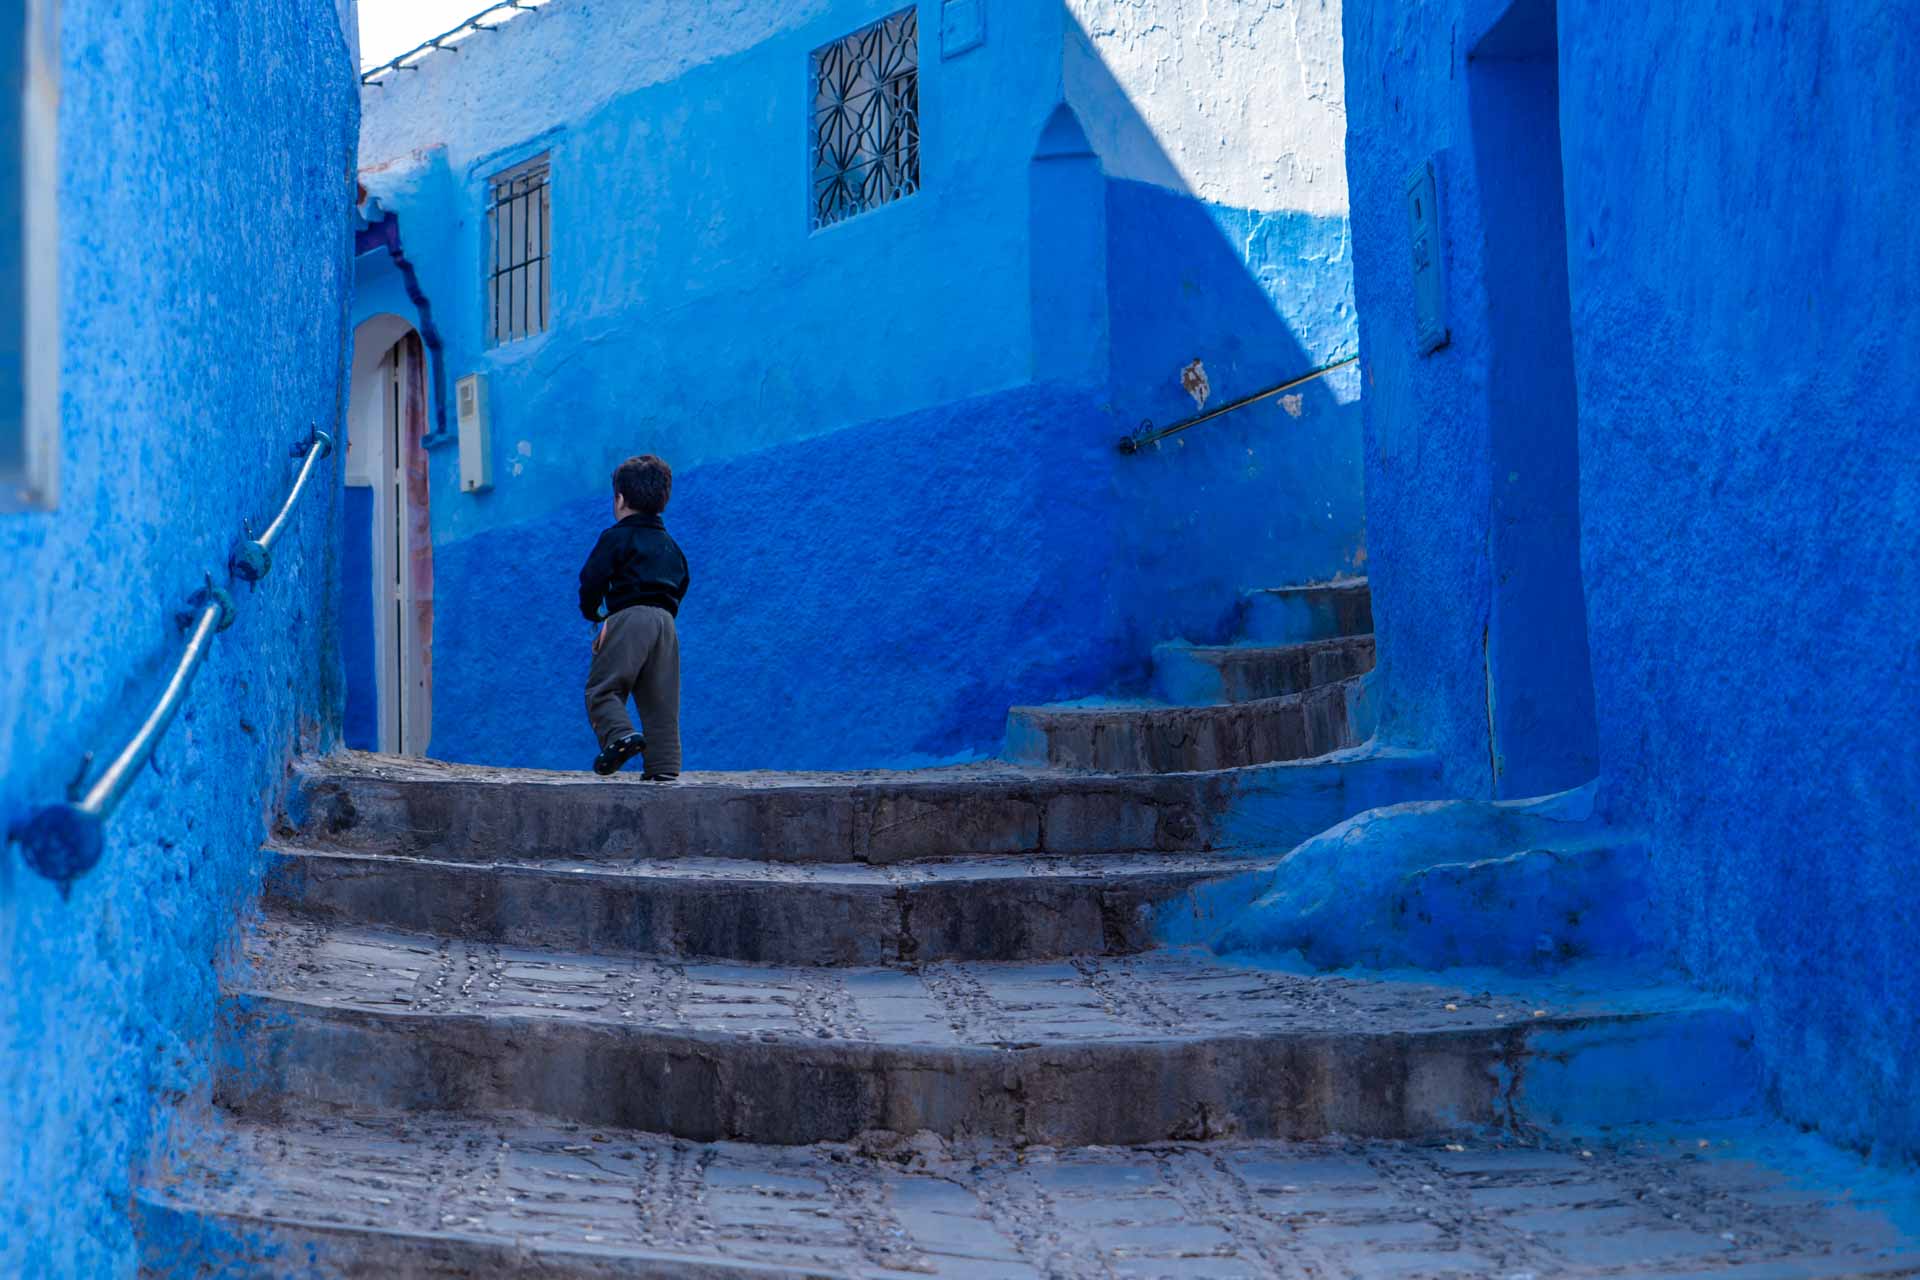 Chefchaouen, Morocco, blue town - Travel Photo Blog by Enrico Pescantini